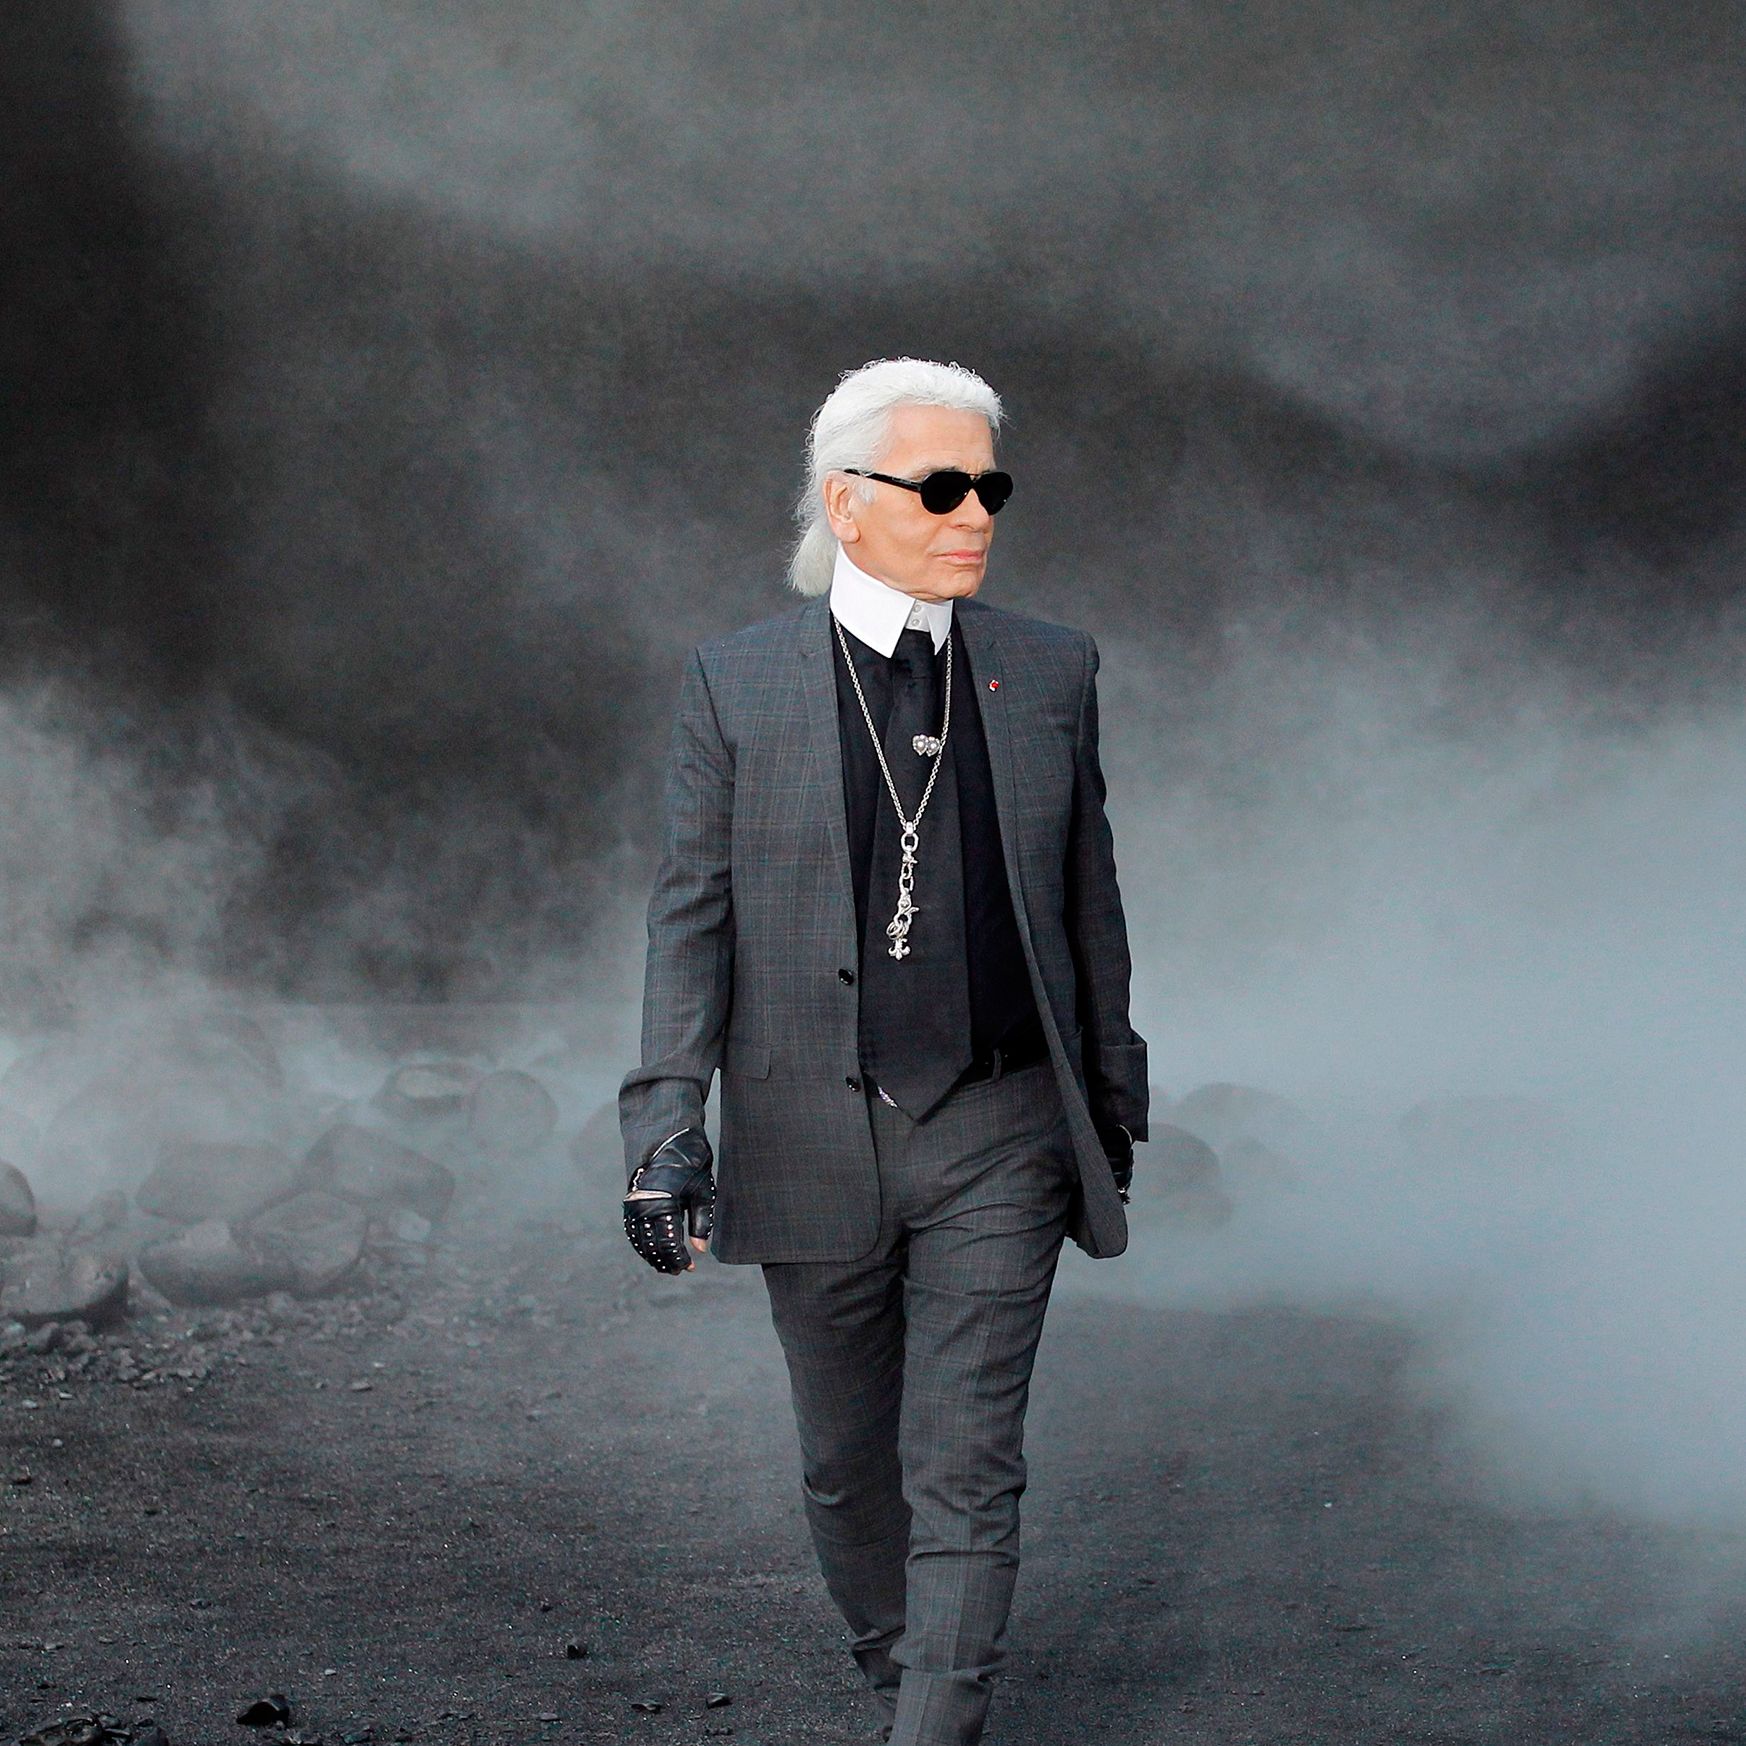 Karl Lagerfeld dead: Chanel creative director dies in Paris aged